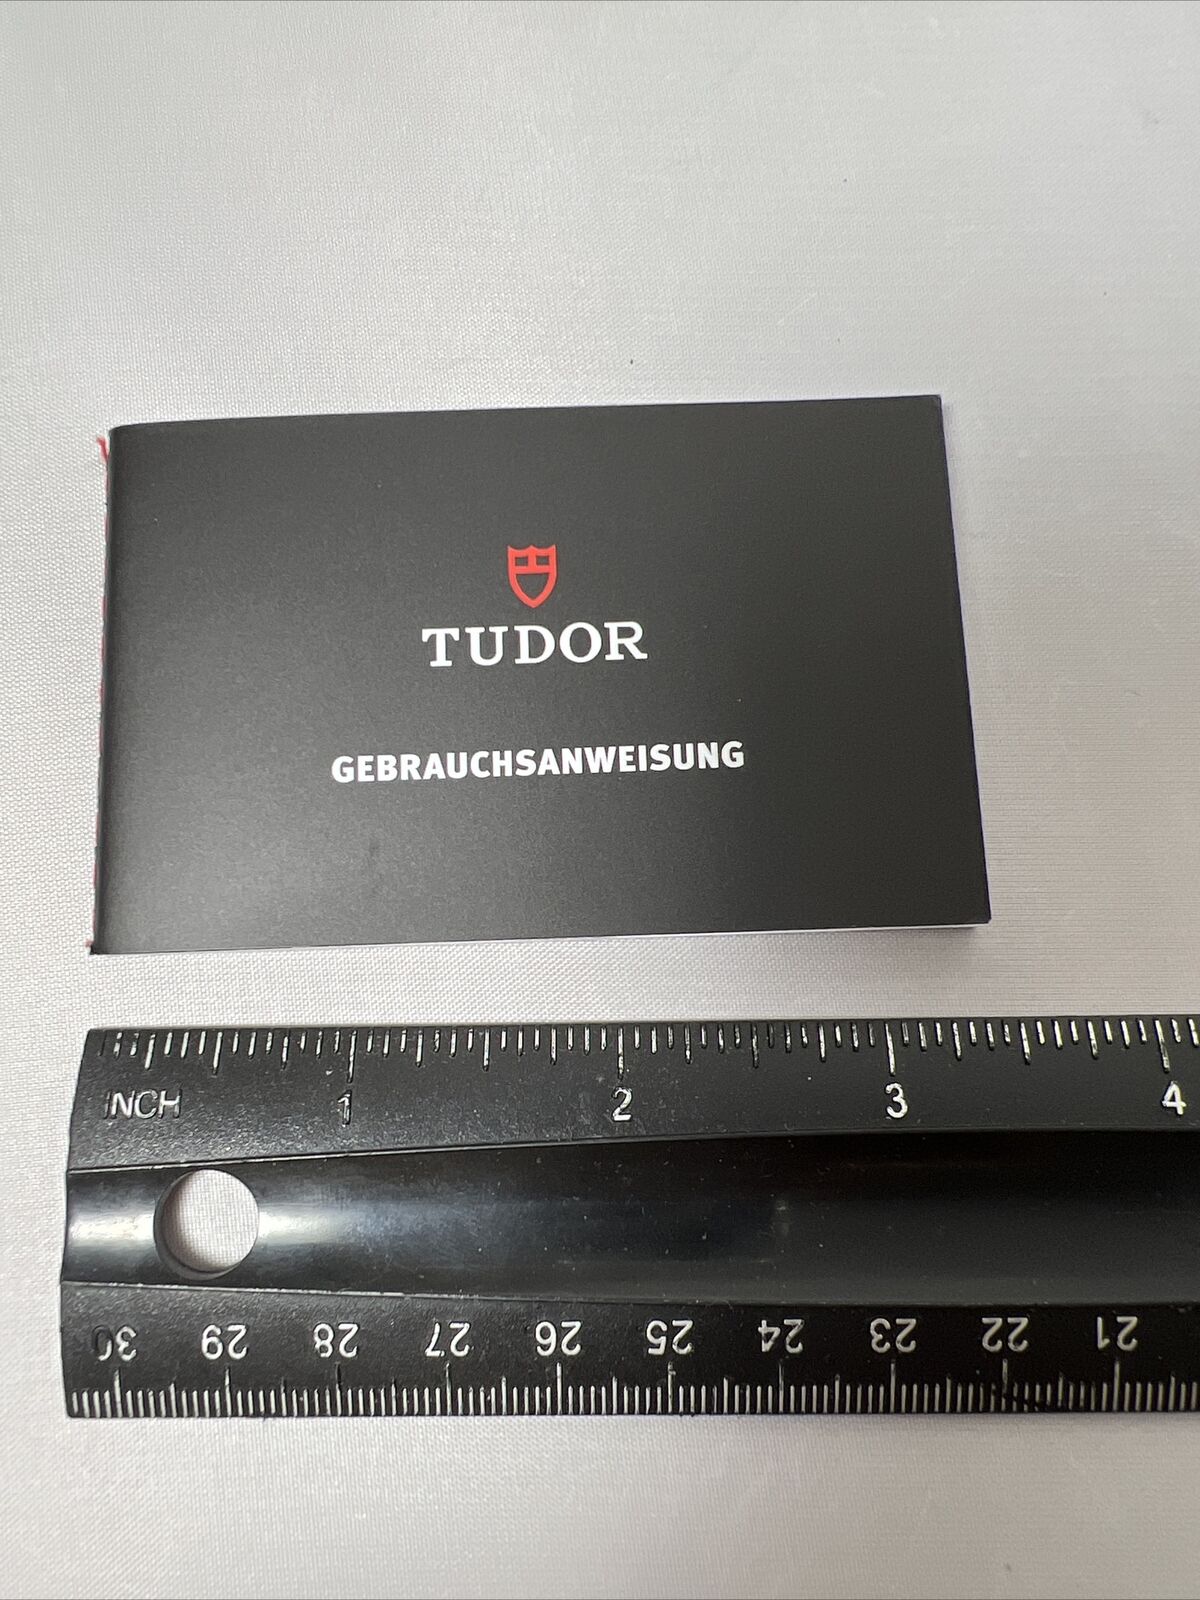 Tudor Watch User Manual Instruction Booklet German 2021 Gebrauchsanweisung